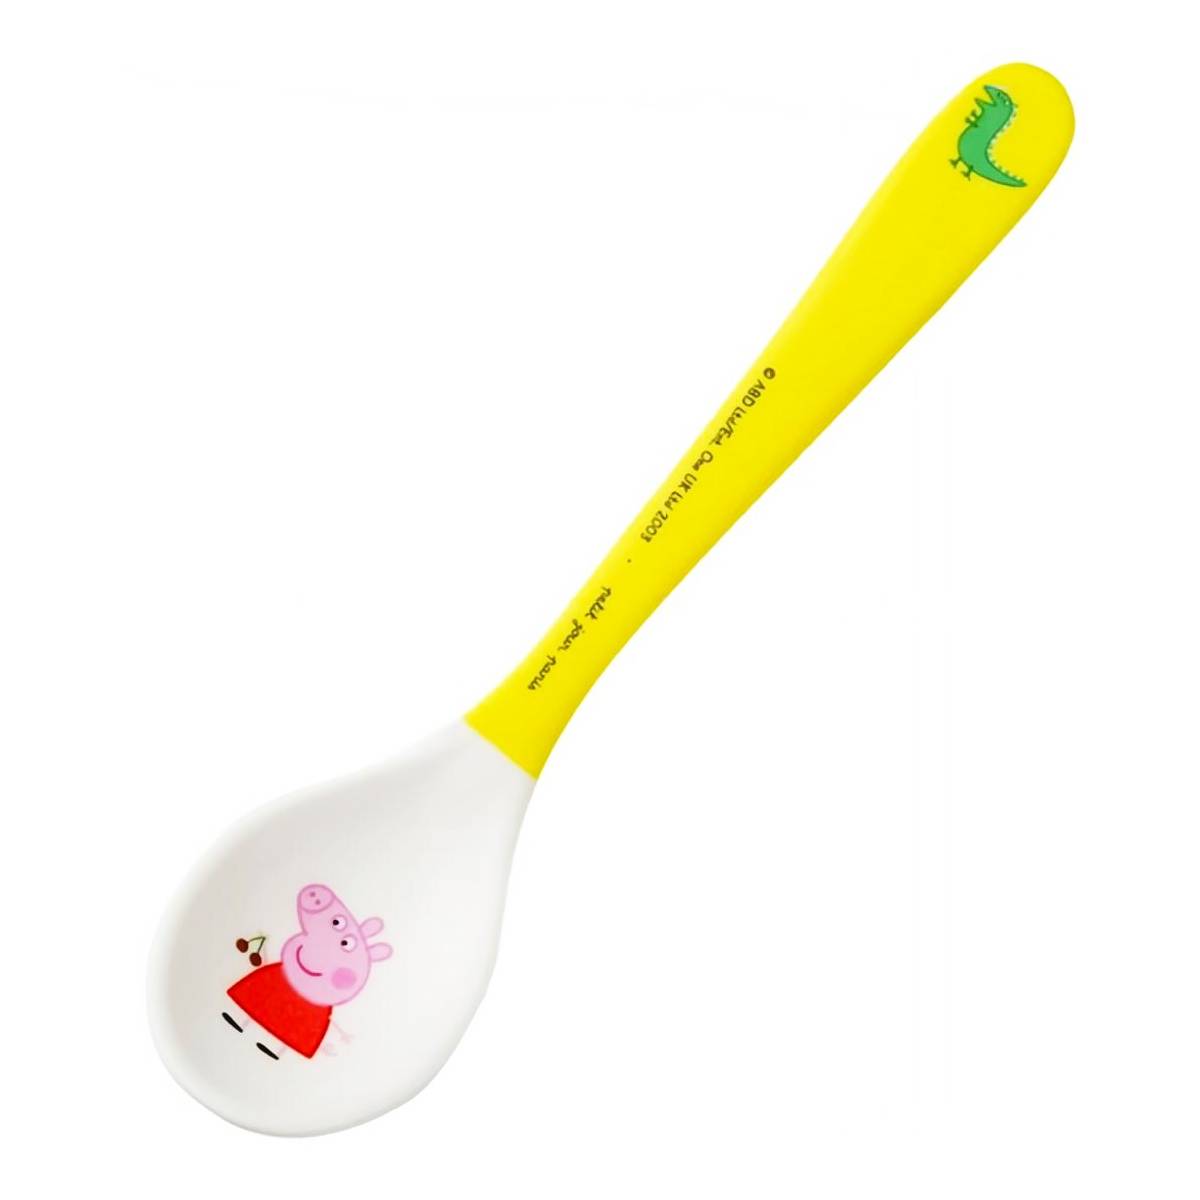 Peppa Pig round spoon for children